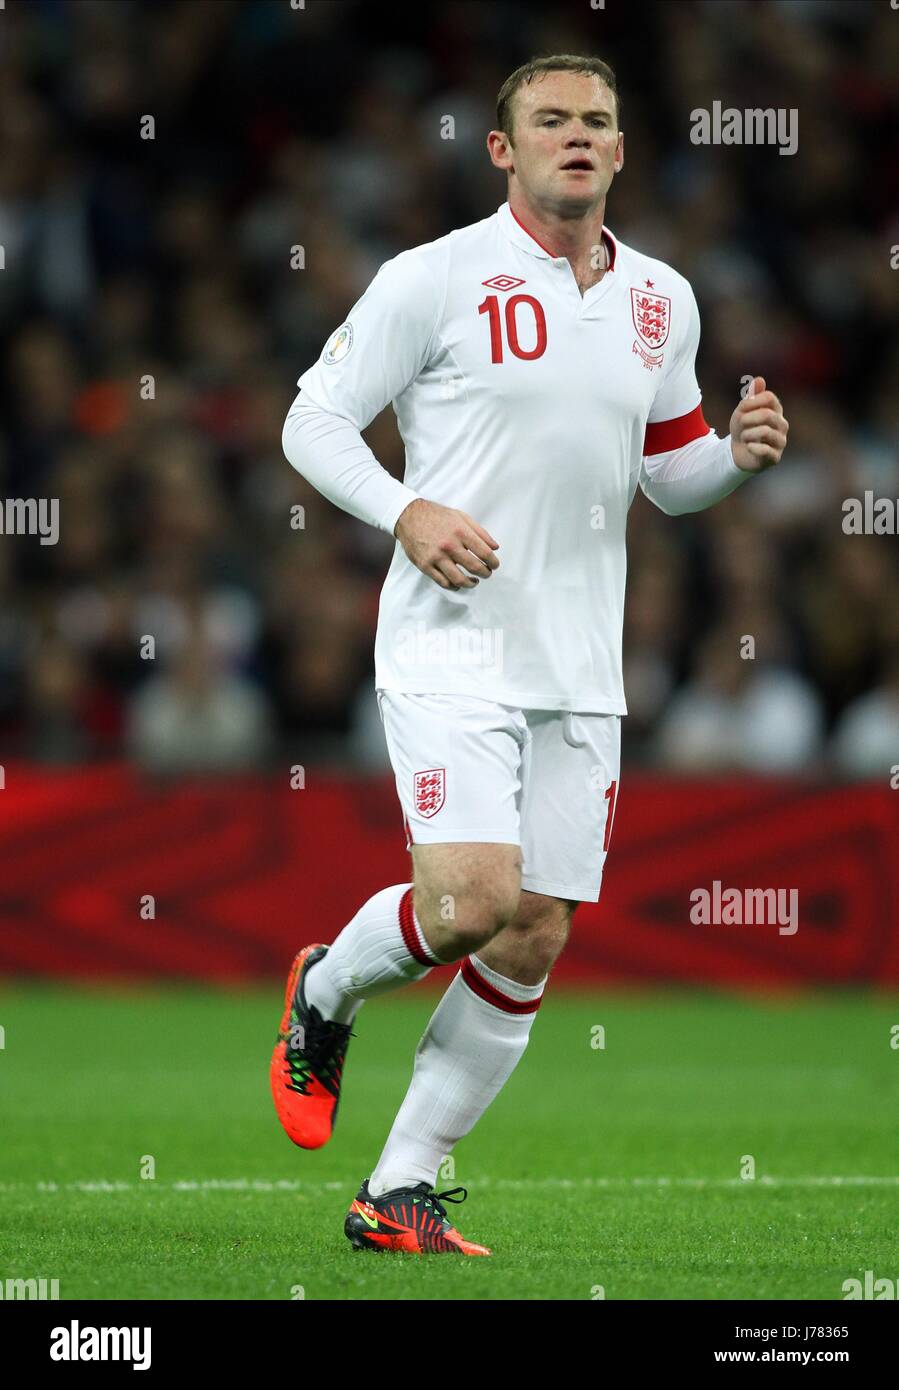 WAYNE ROONEY, ENGLAND, ENGLAND V SAN MARINO. WORLD CUP 2014 QUALIFIER, 2012 Stock Photo